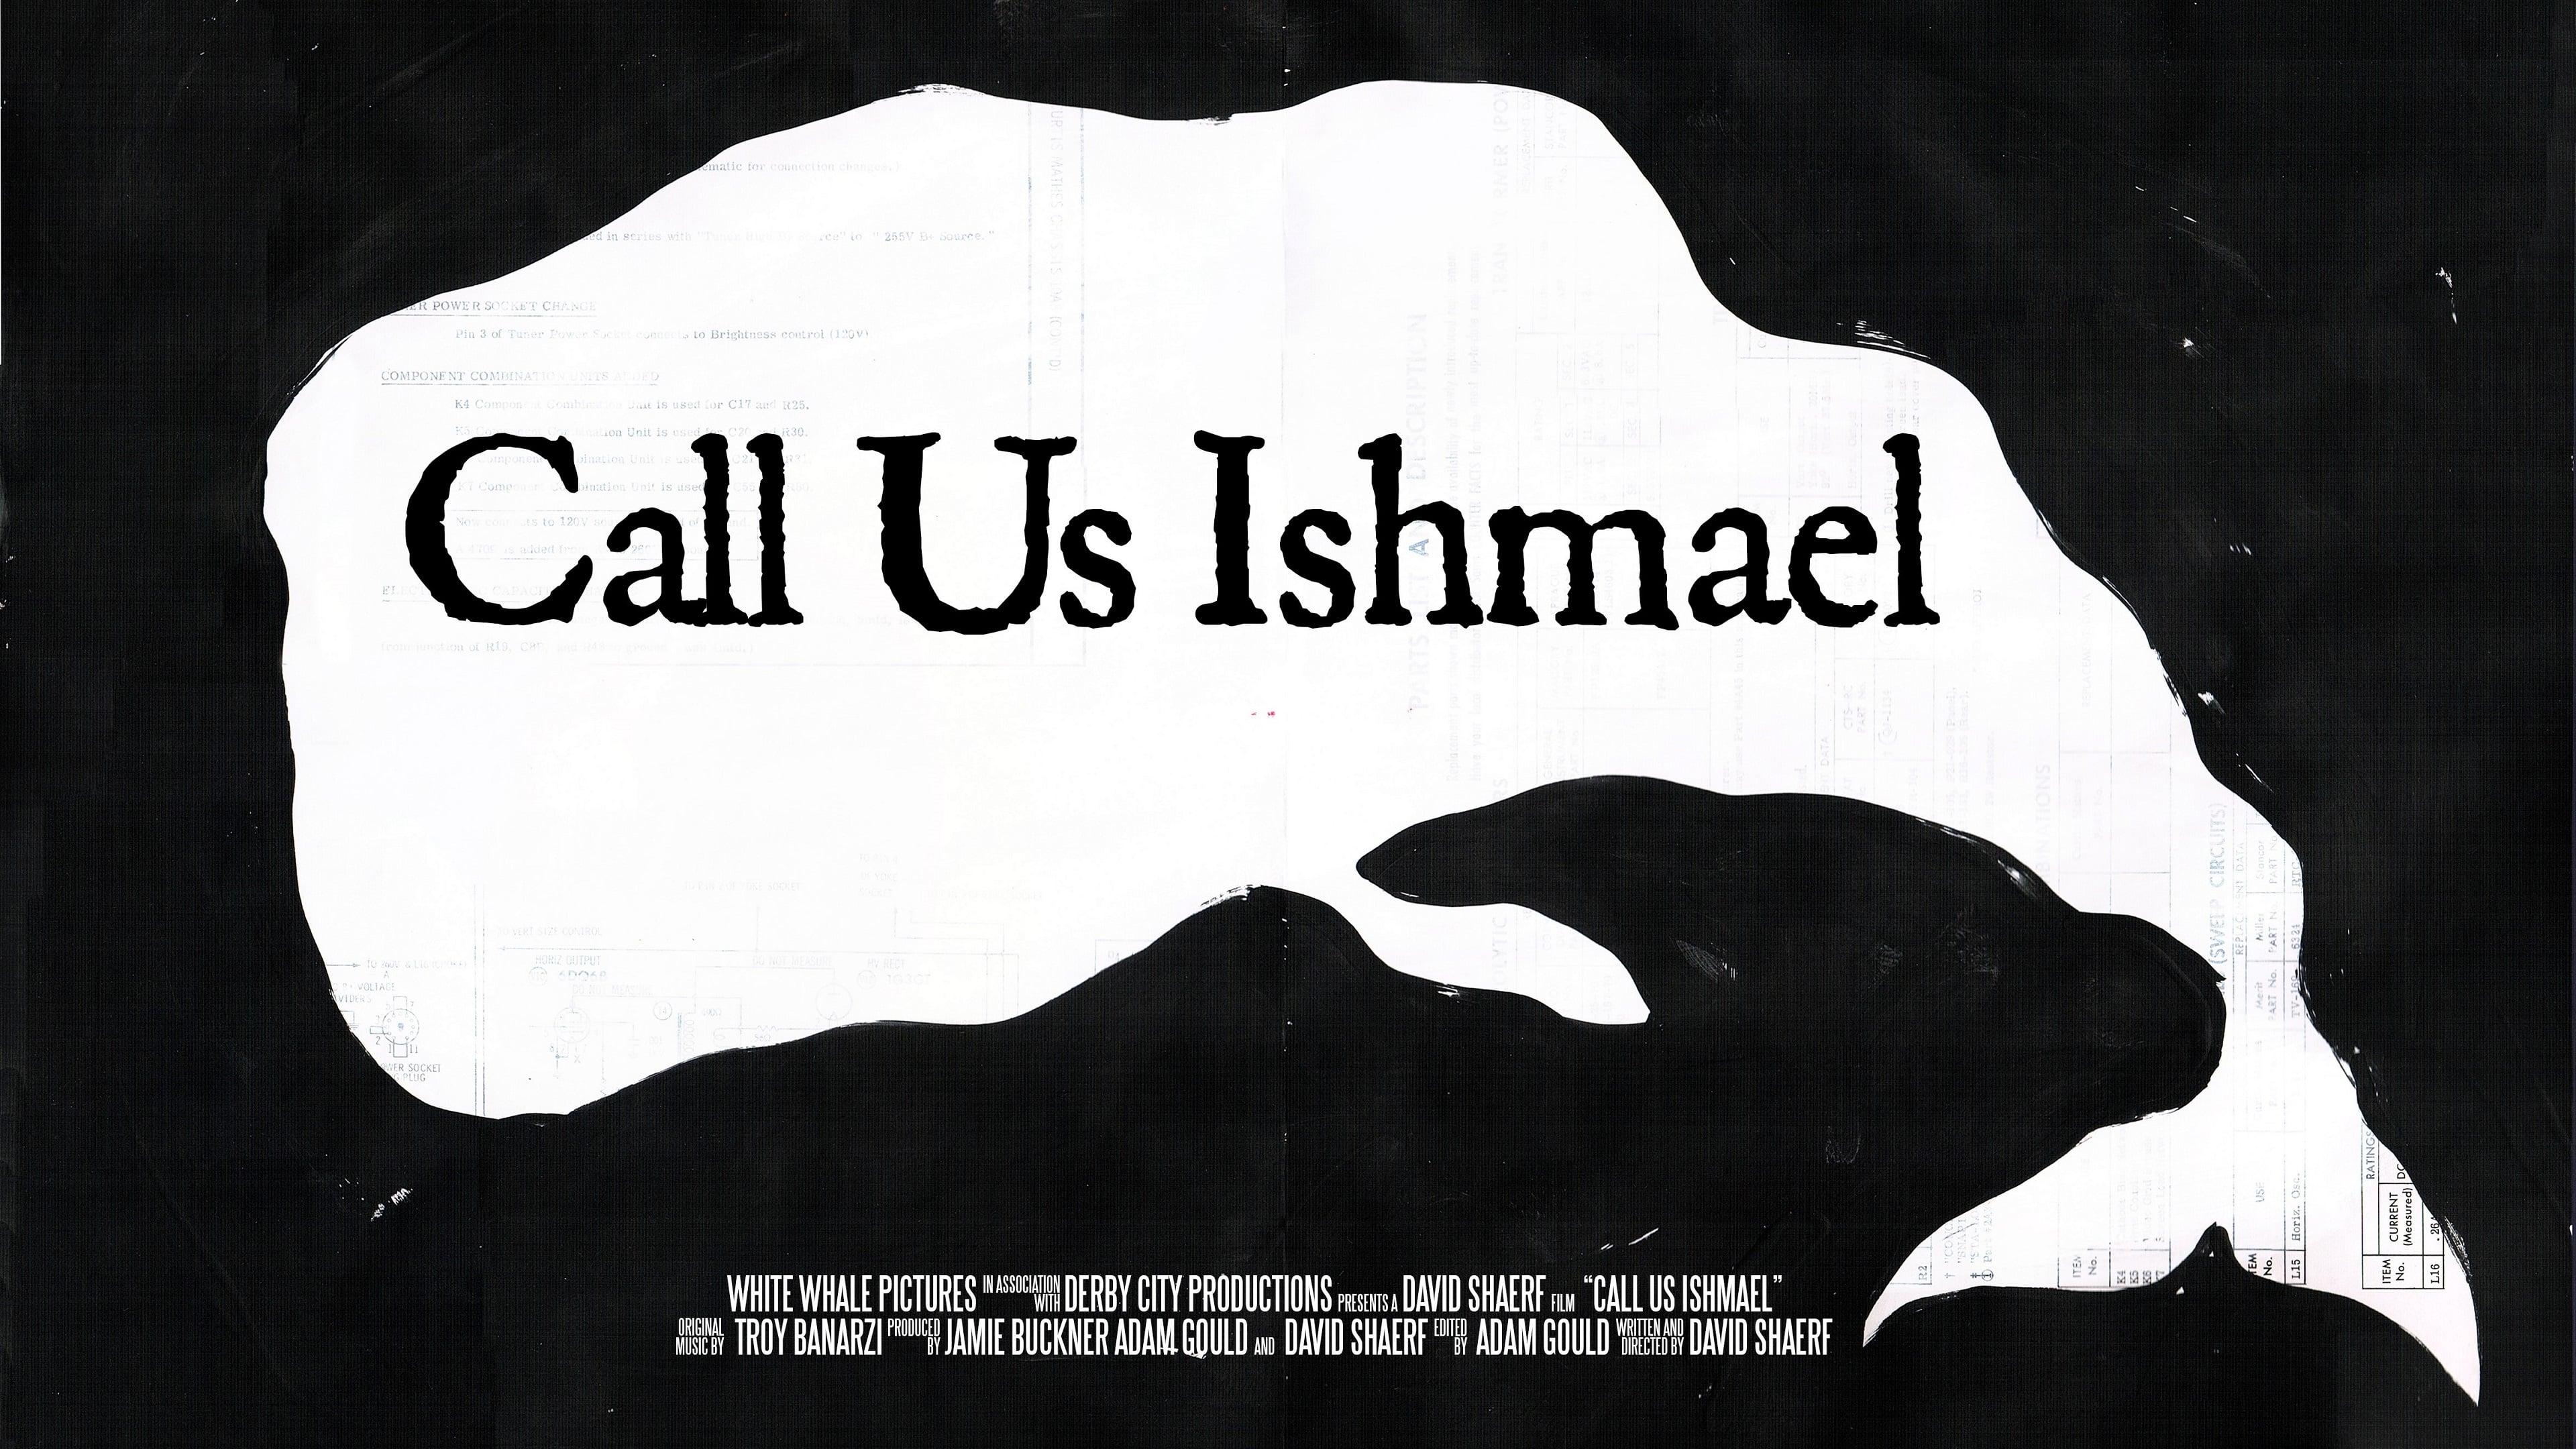 Call Us Ishmael backdrop